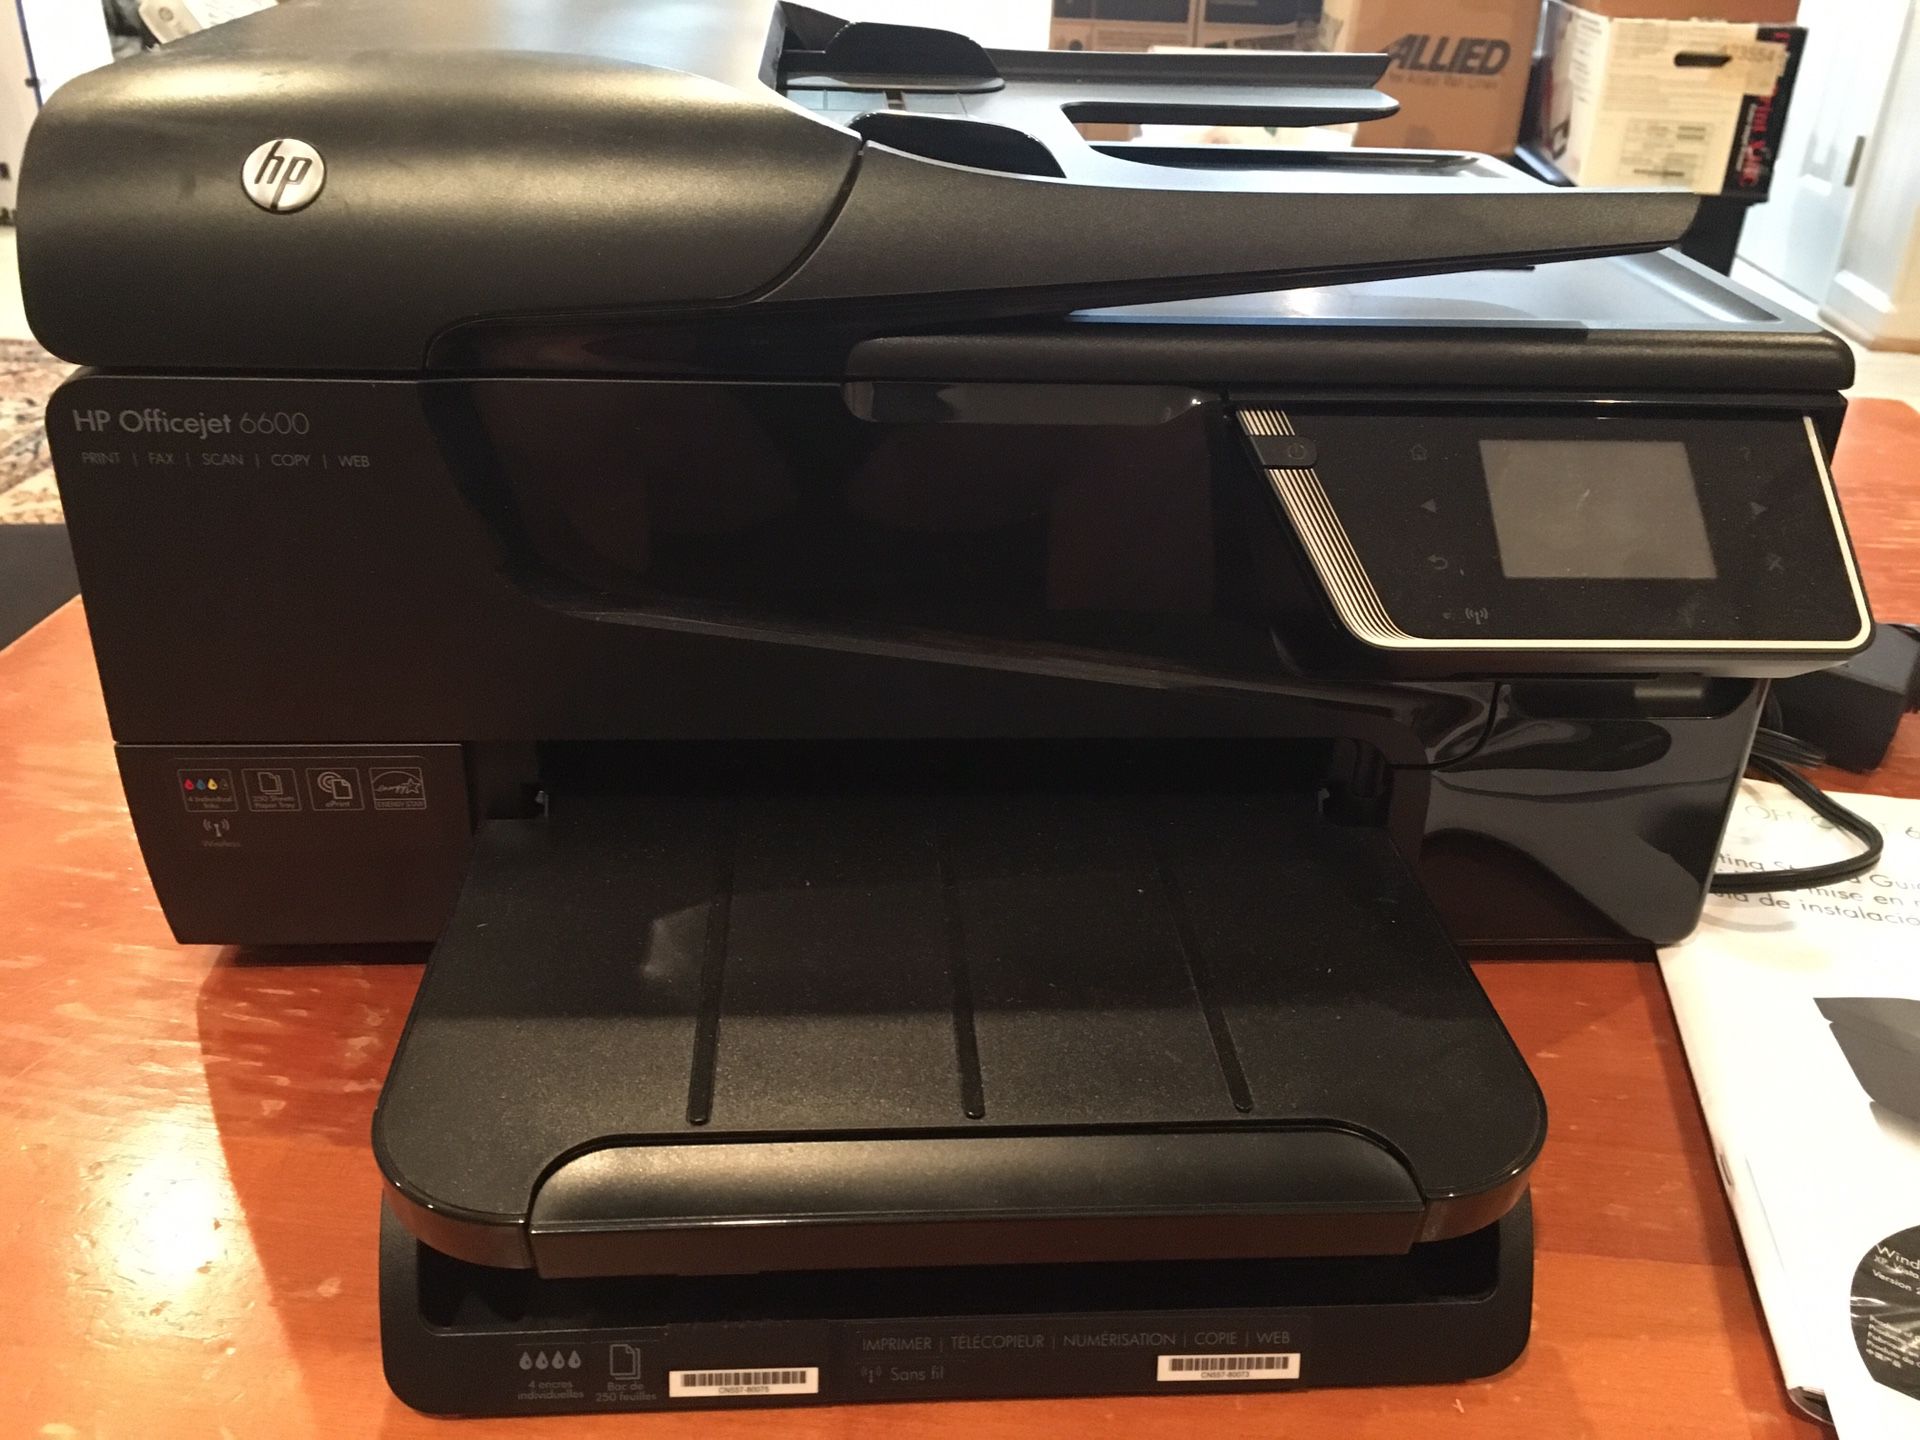 HP Officejet 6600 Printer, Scanner, Copier, Fax Machine. Like new! $25